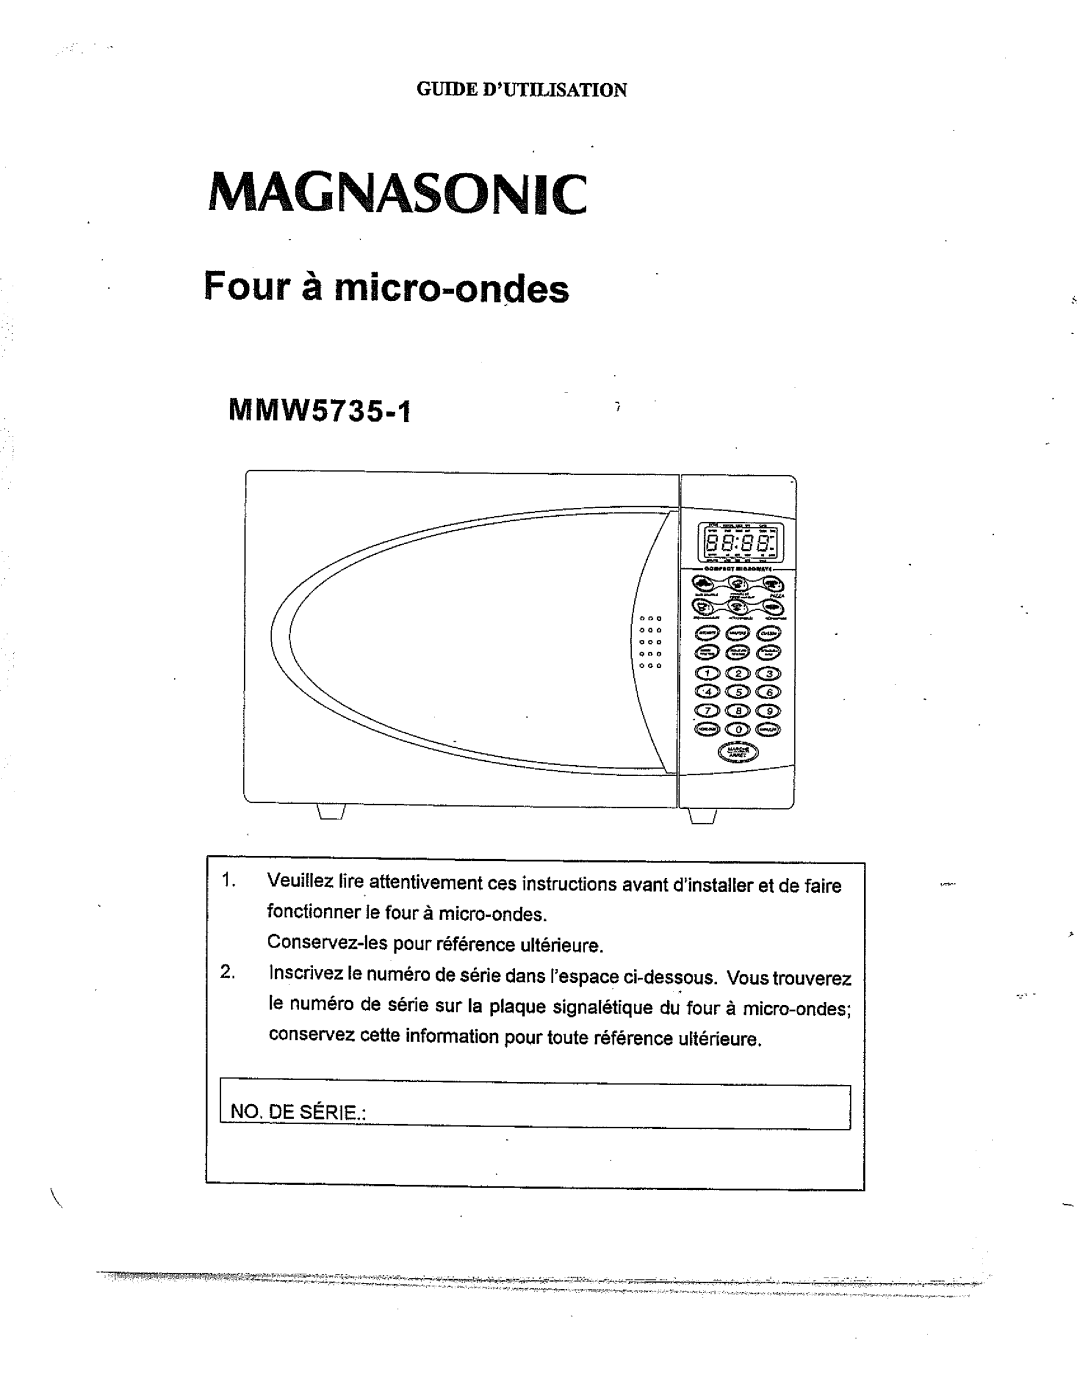 Magnasonic MMW5735-1 manual 